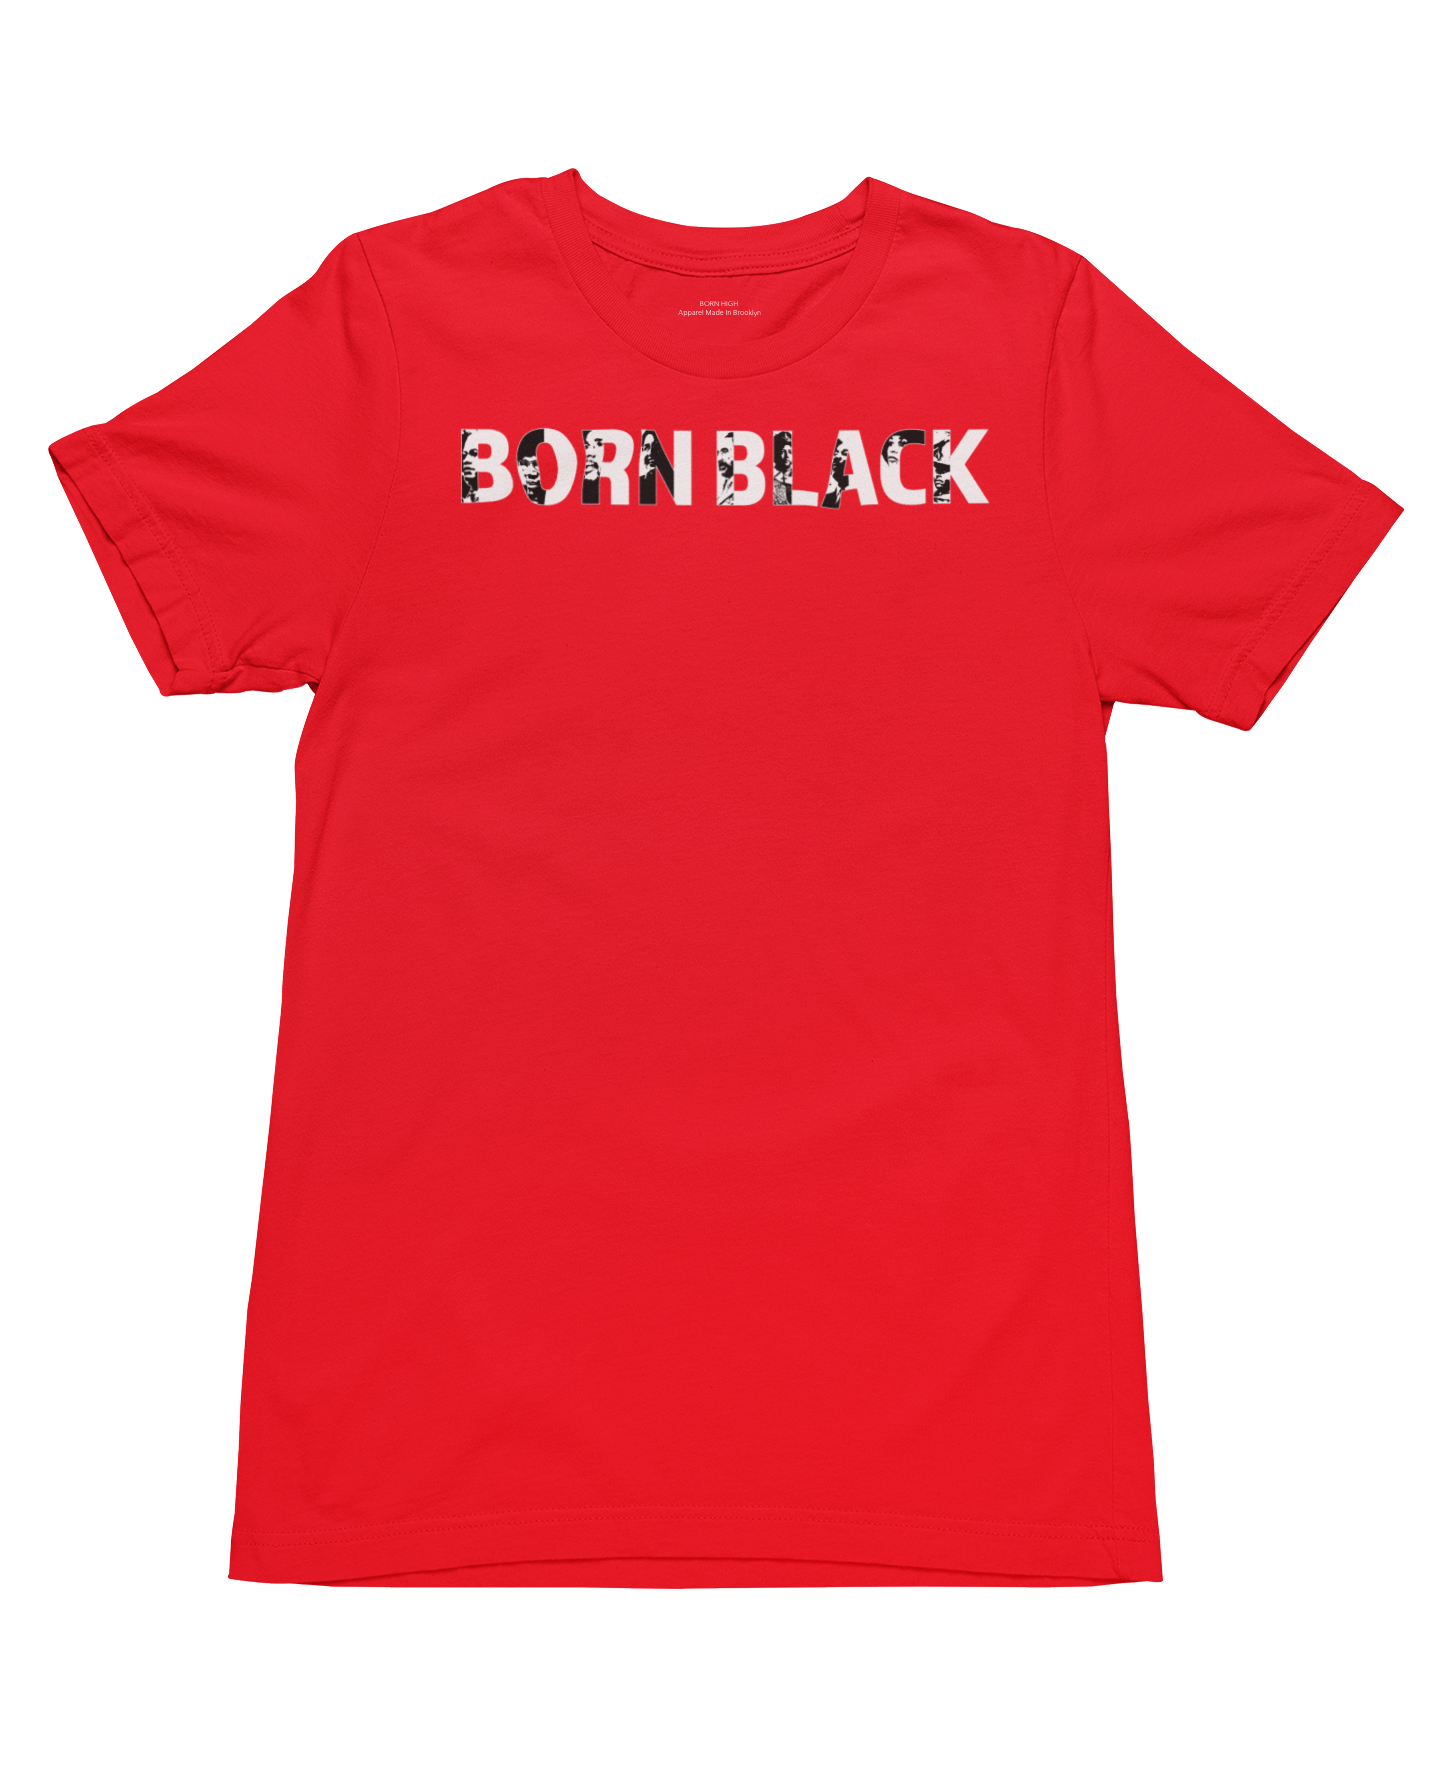 Born Black T-shirt Red